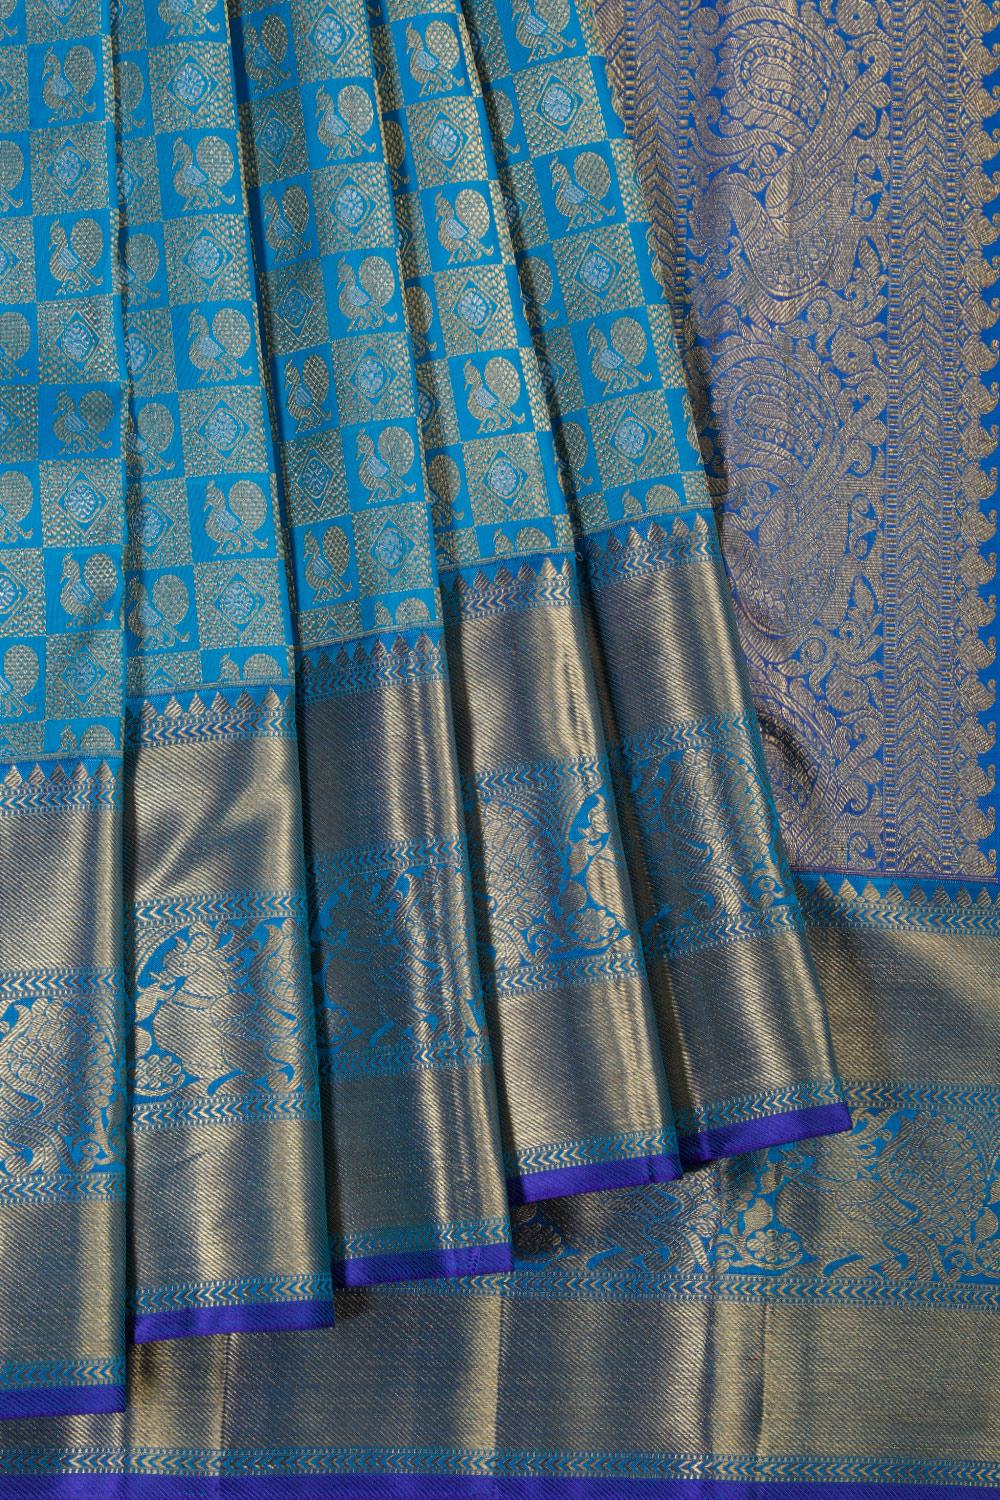 Amazing Blue Kanchipattu Saree With Peacocks Border